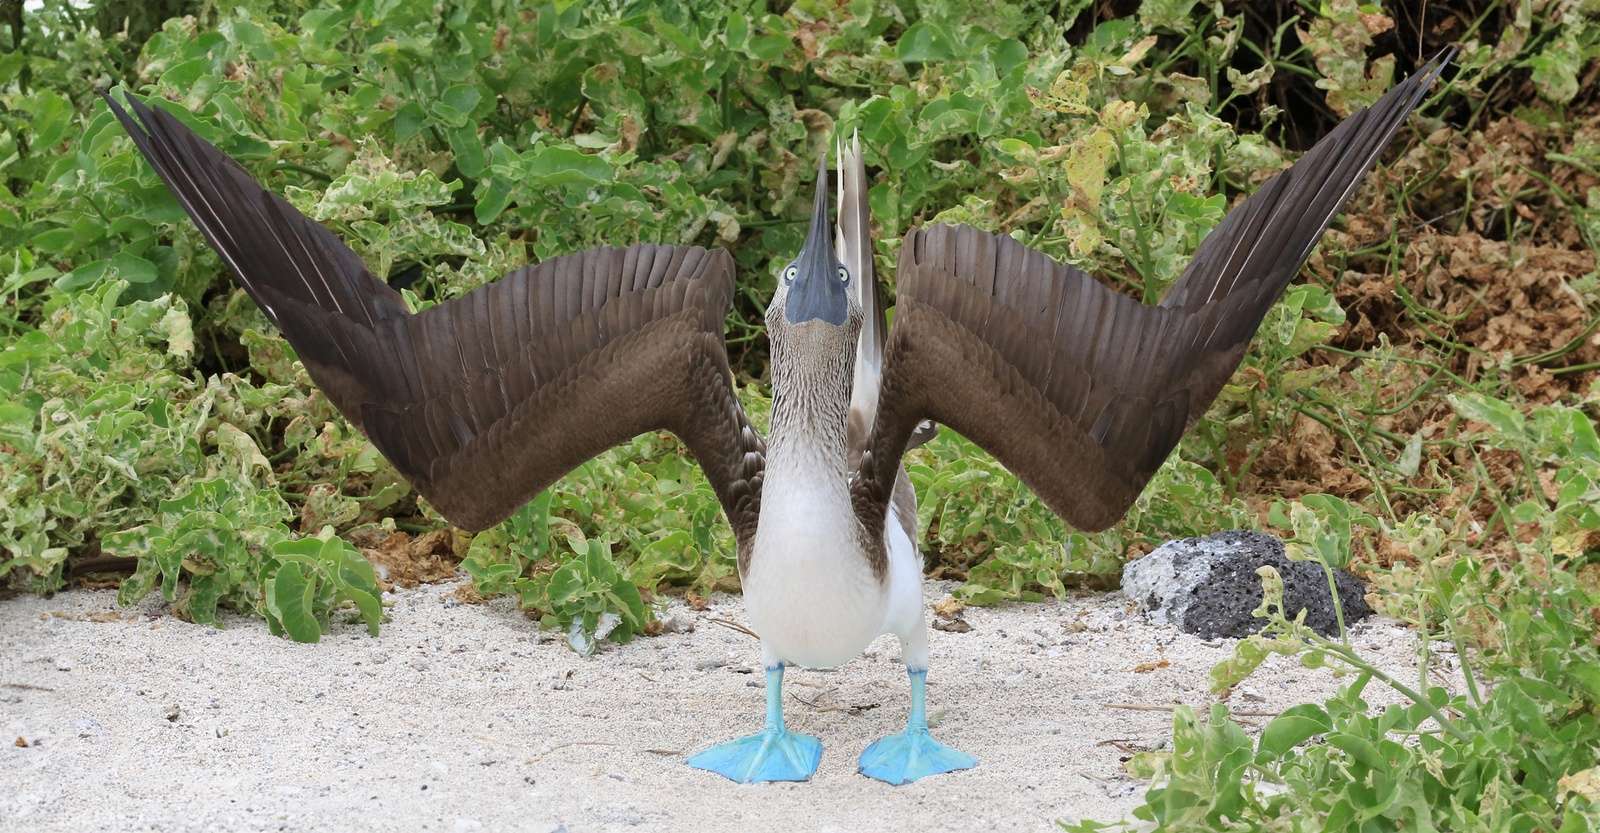 Blue-footed booby, Galapagos Islands, Ecuador.